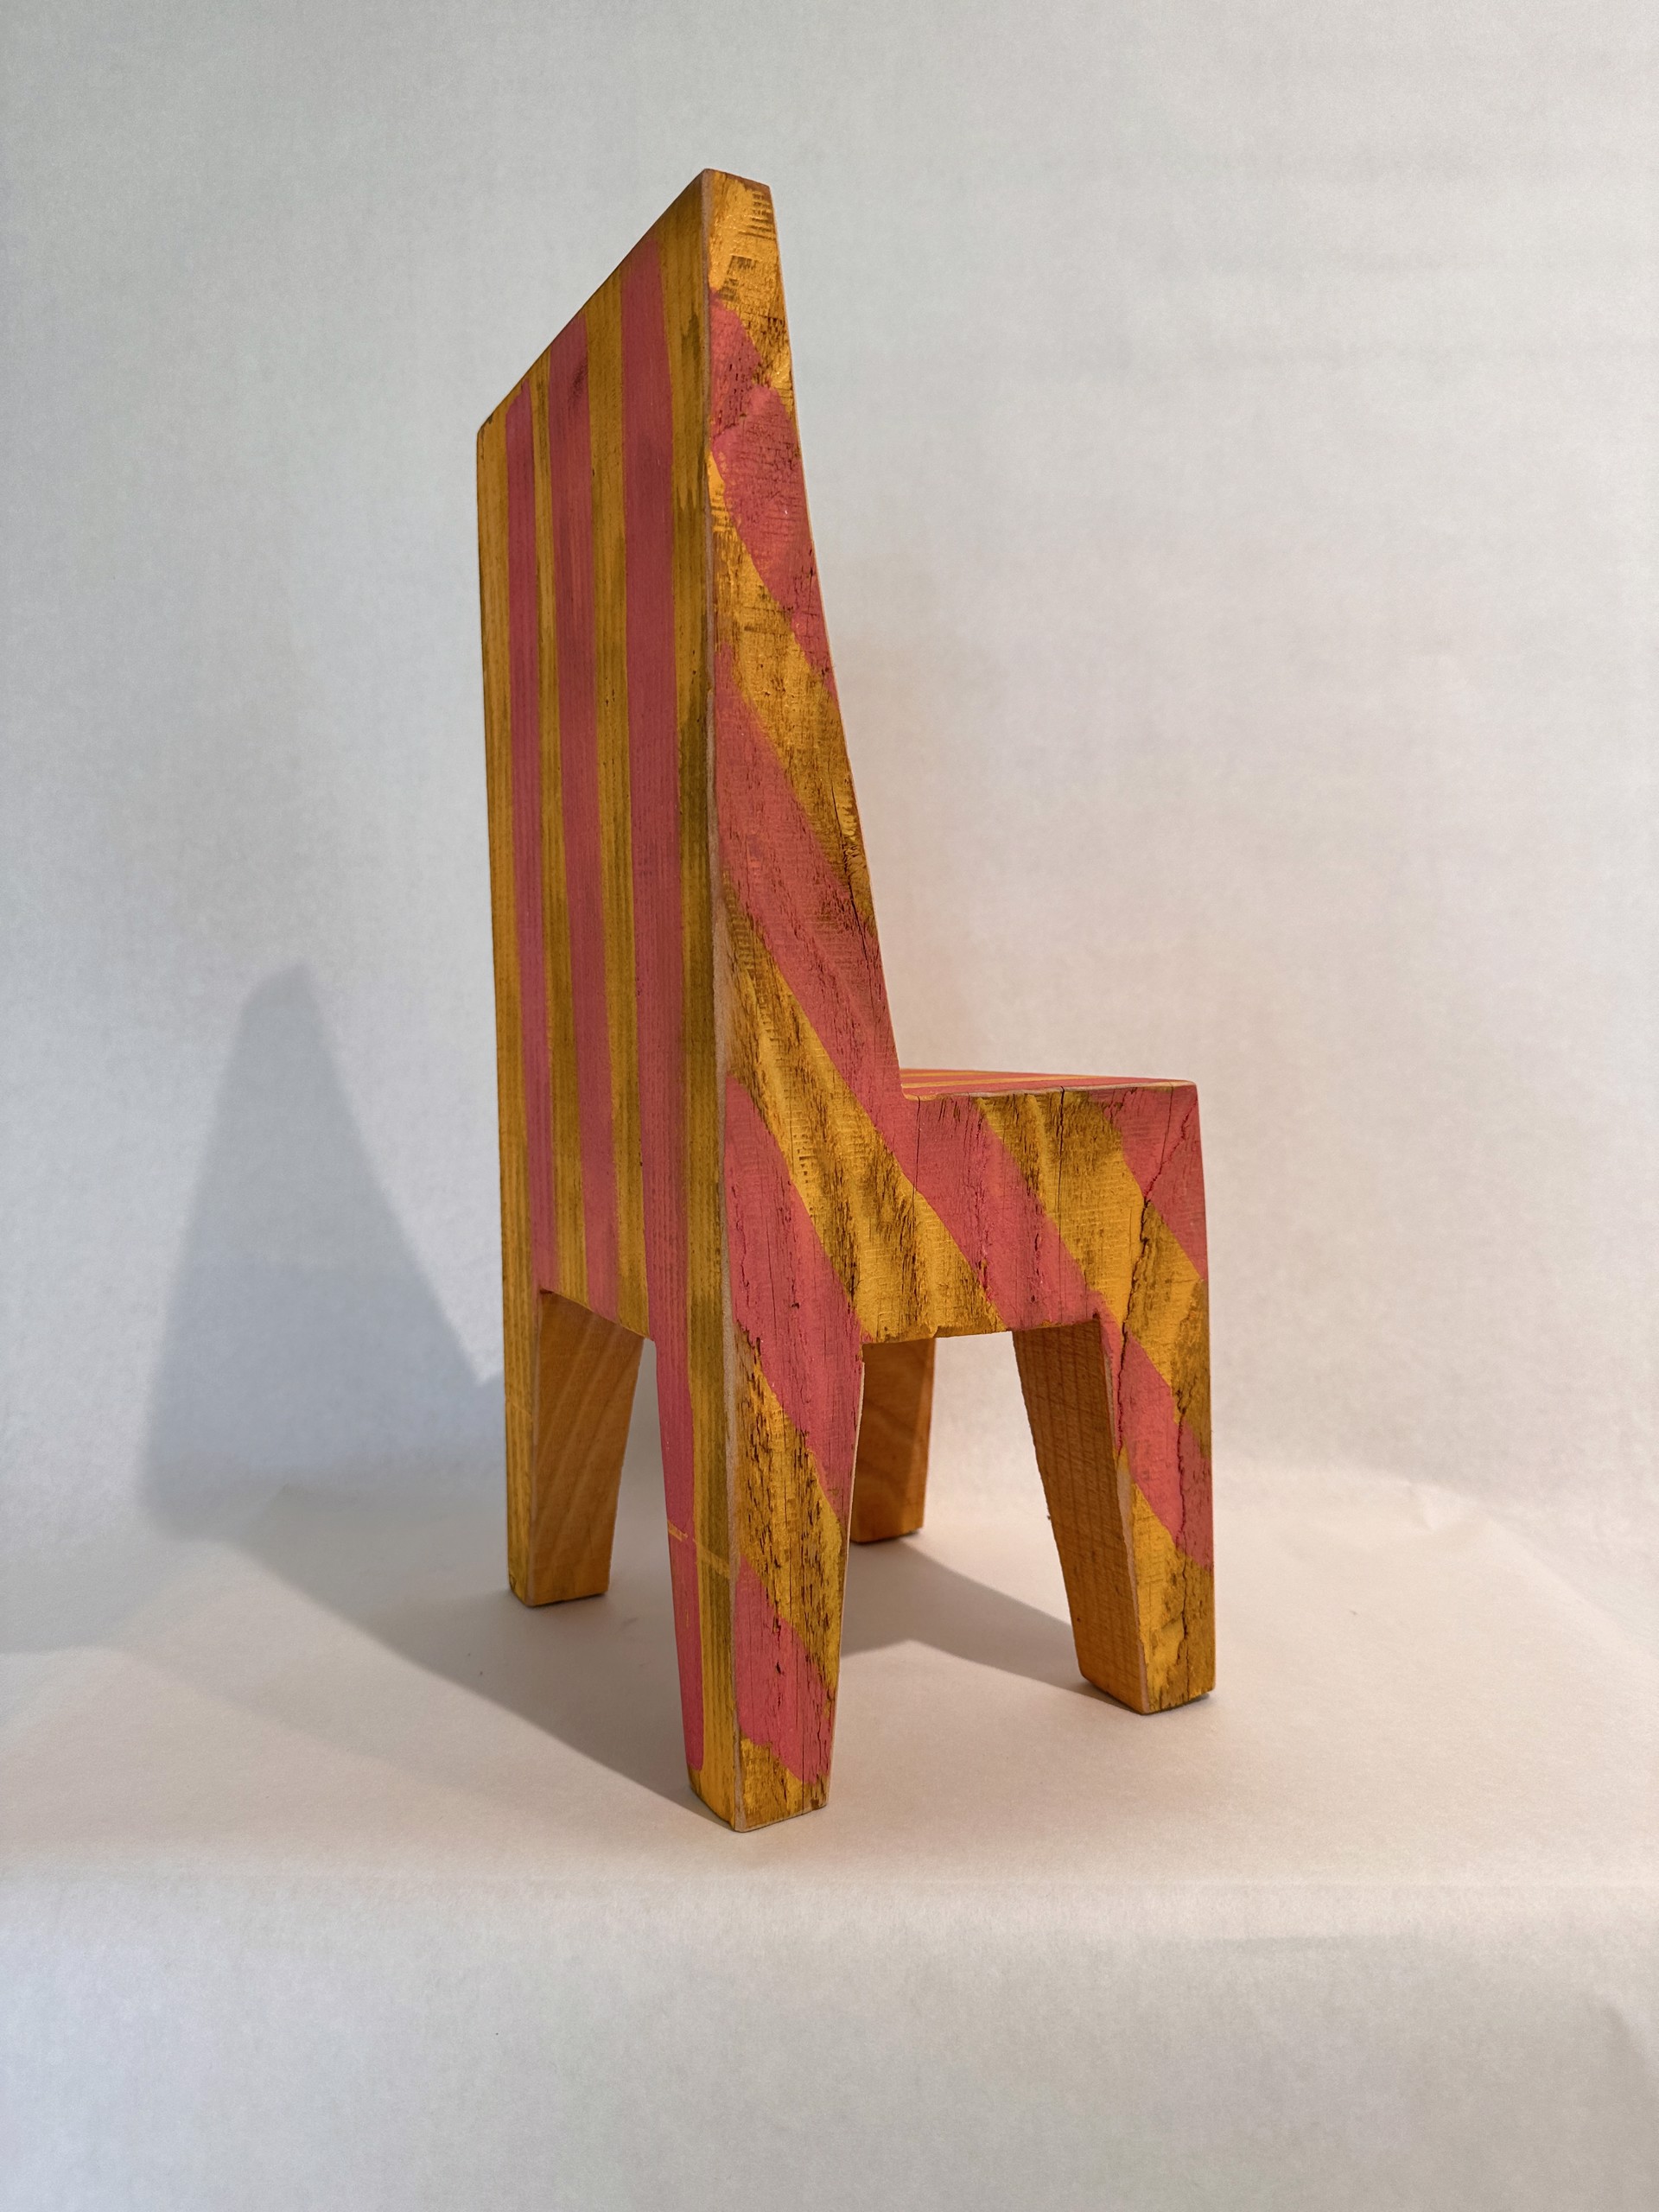 Large Chair Sculpture by Ellie Richards